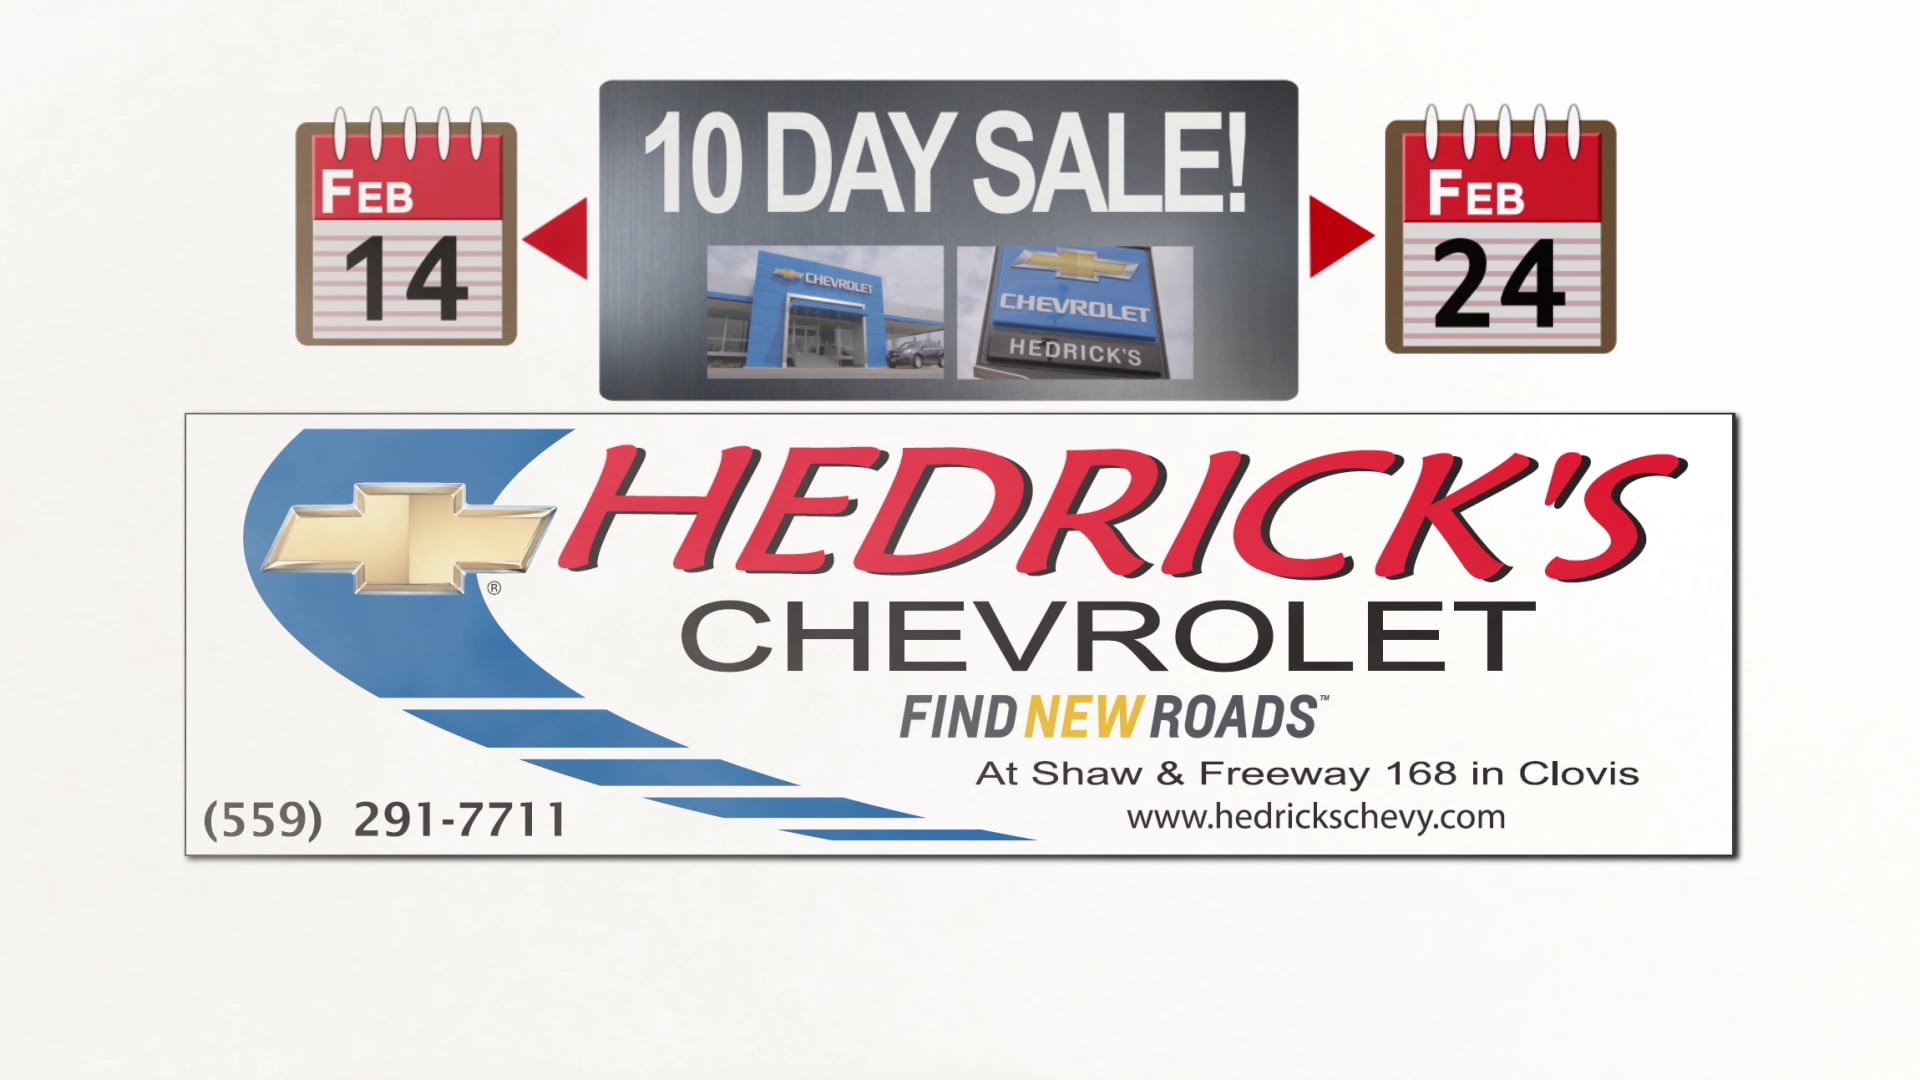 Hedrick's Chevrolet: 10 Day Sale